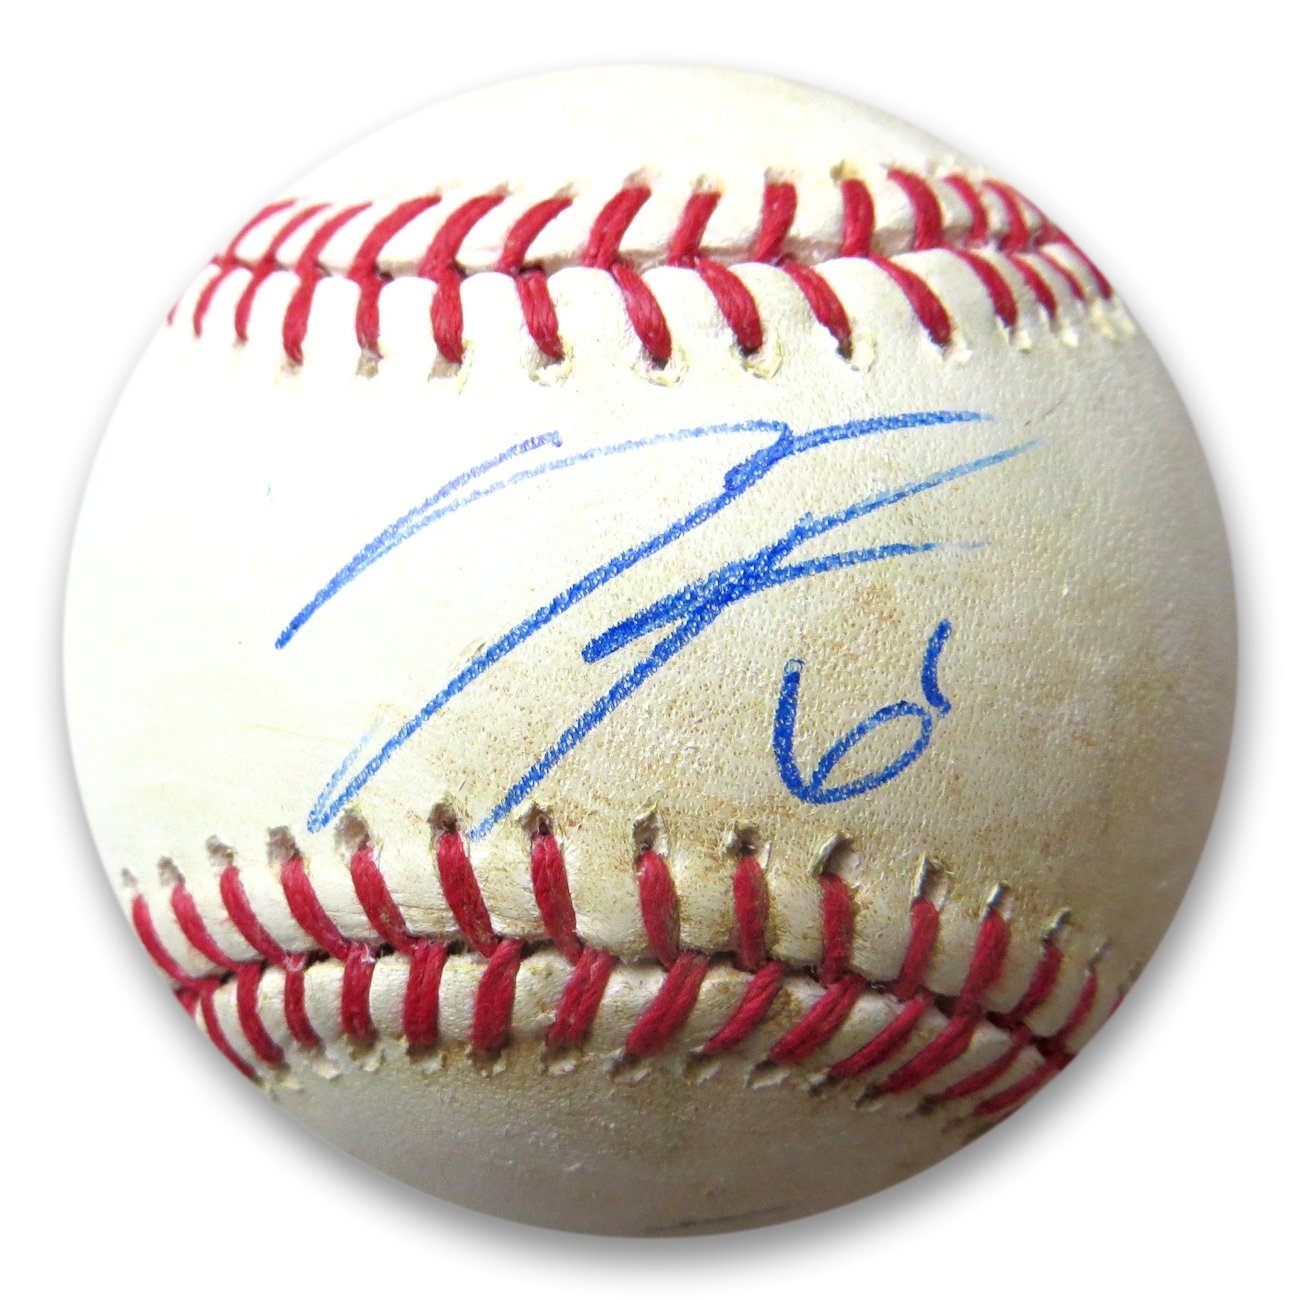 Joc Pederson Los Angeles Dodgers Autographed Baseball with MLB Debut 9-1-14 Inscription